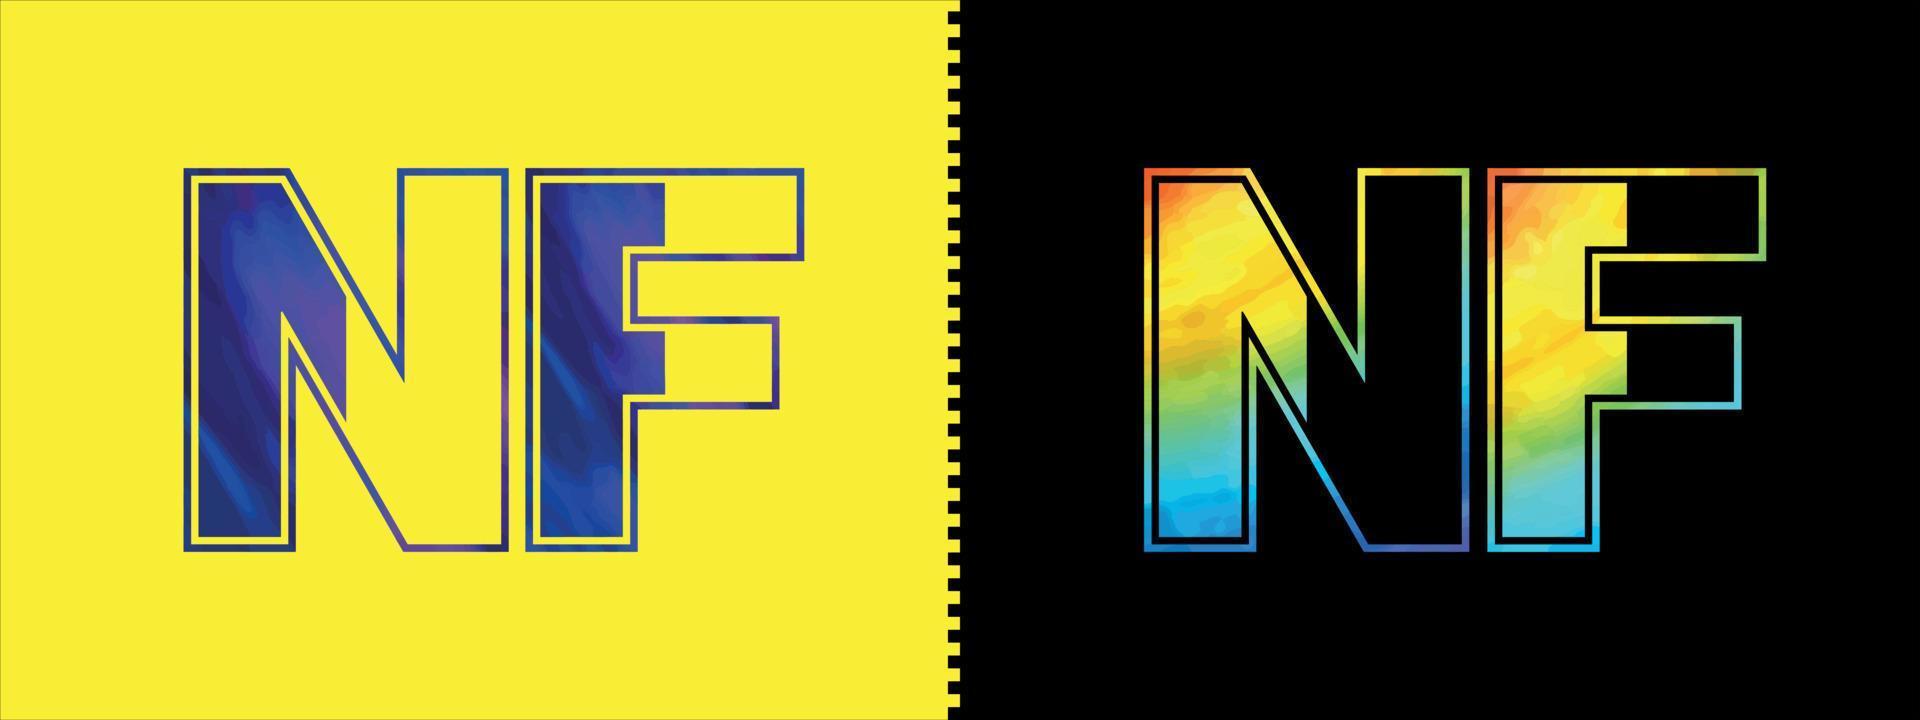 letra nf logo diseño vector modelo. creativo moderno lujoso logotipo para corporativo negocio identidad